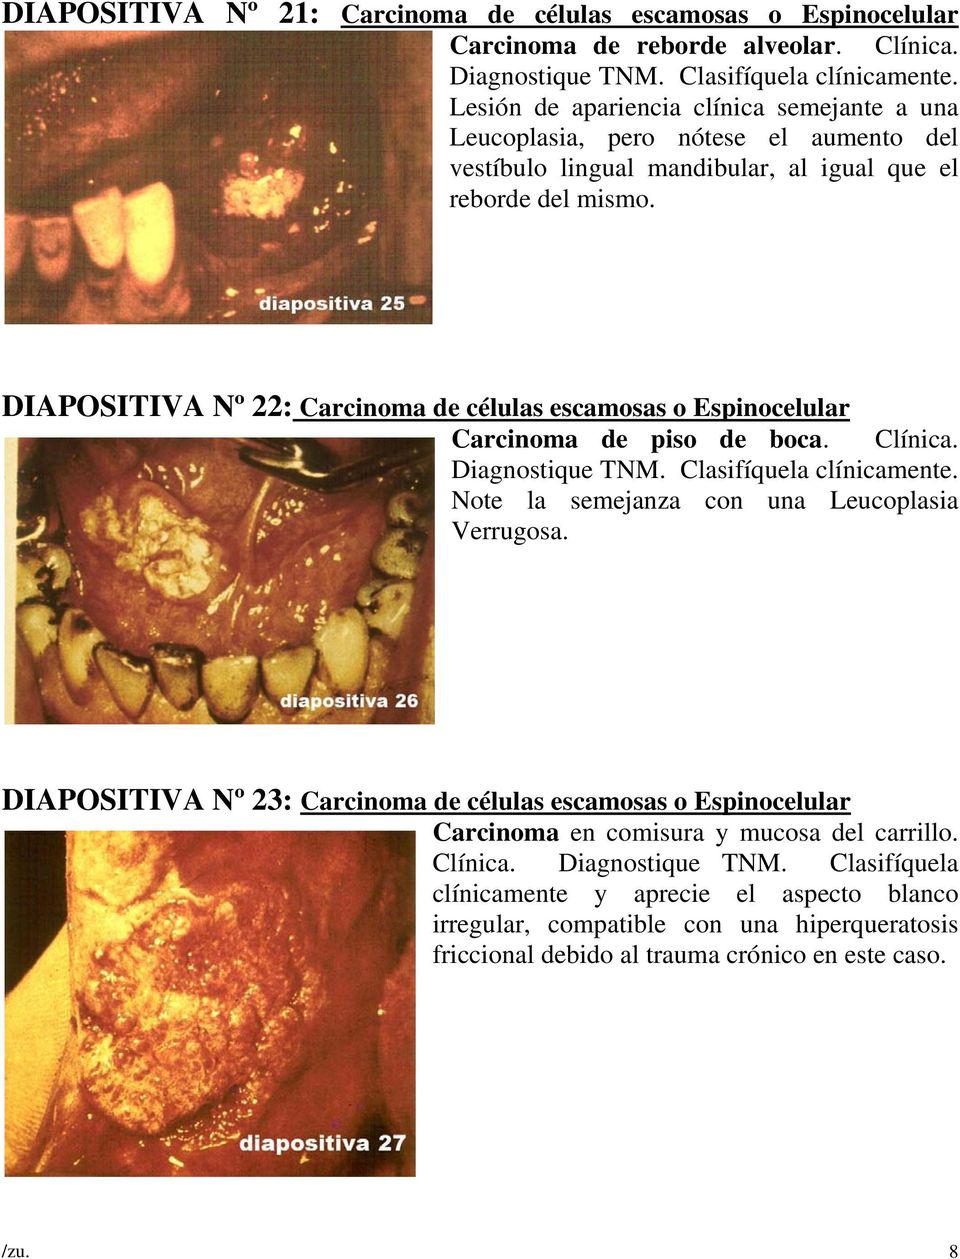 DIAPOSITIVA Nº 22: Carcinoma de células escamosas o Espinocelular Carcinoma de piso de boca. Clínica. Diagnostique TNM. Clasifíquela clínicamente. Note la semejanza con una Leucoplasia Verrugosa.